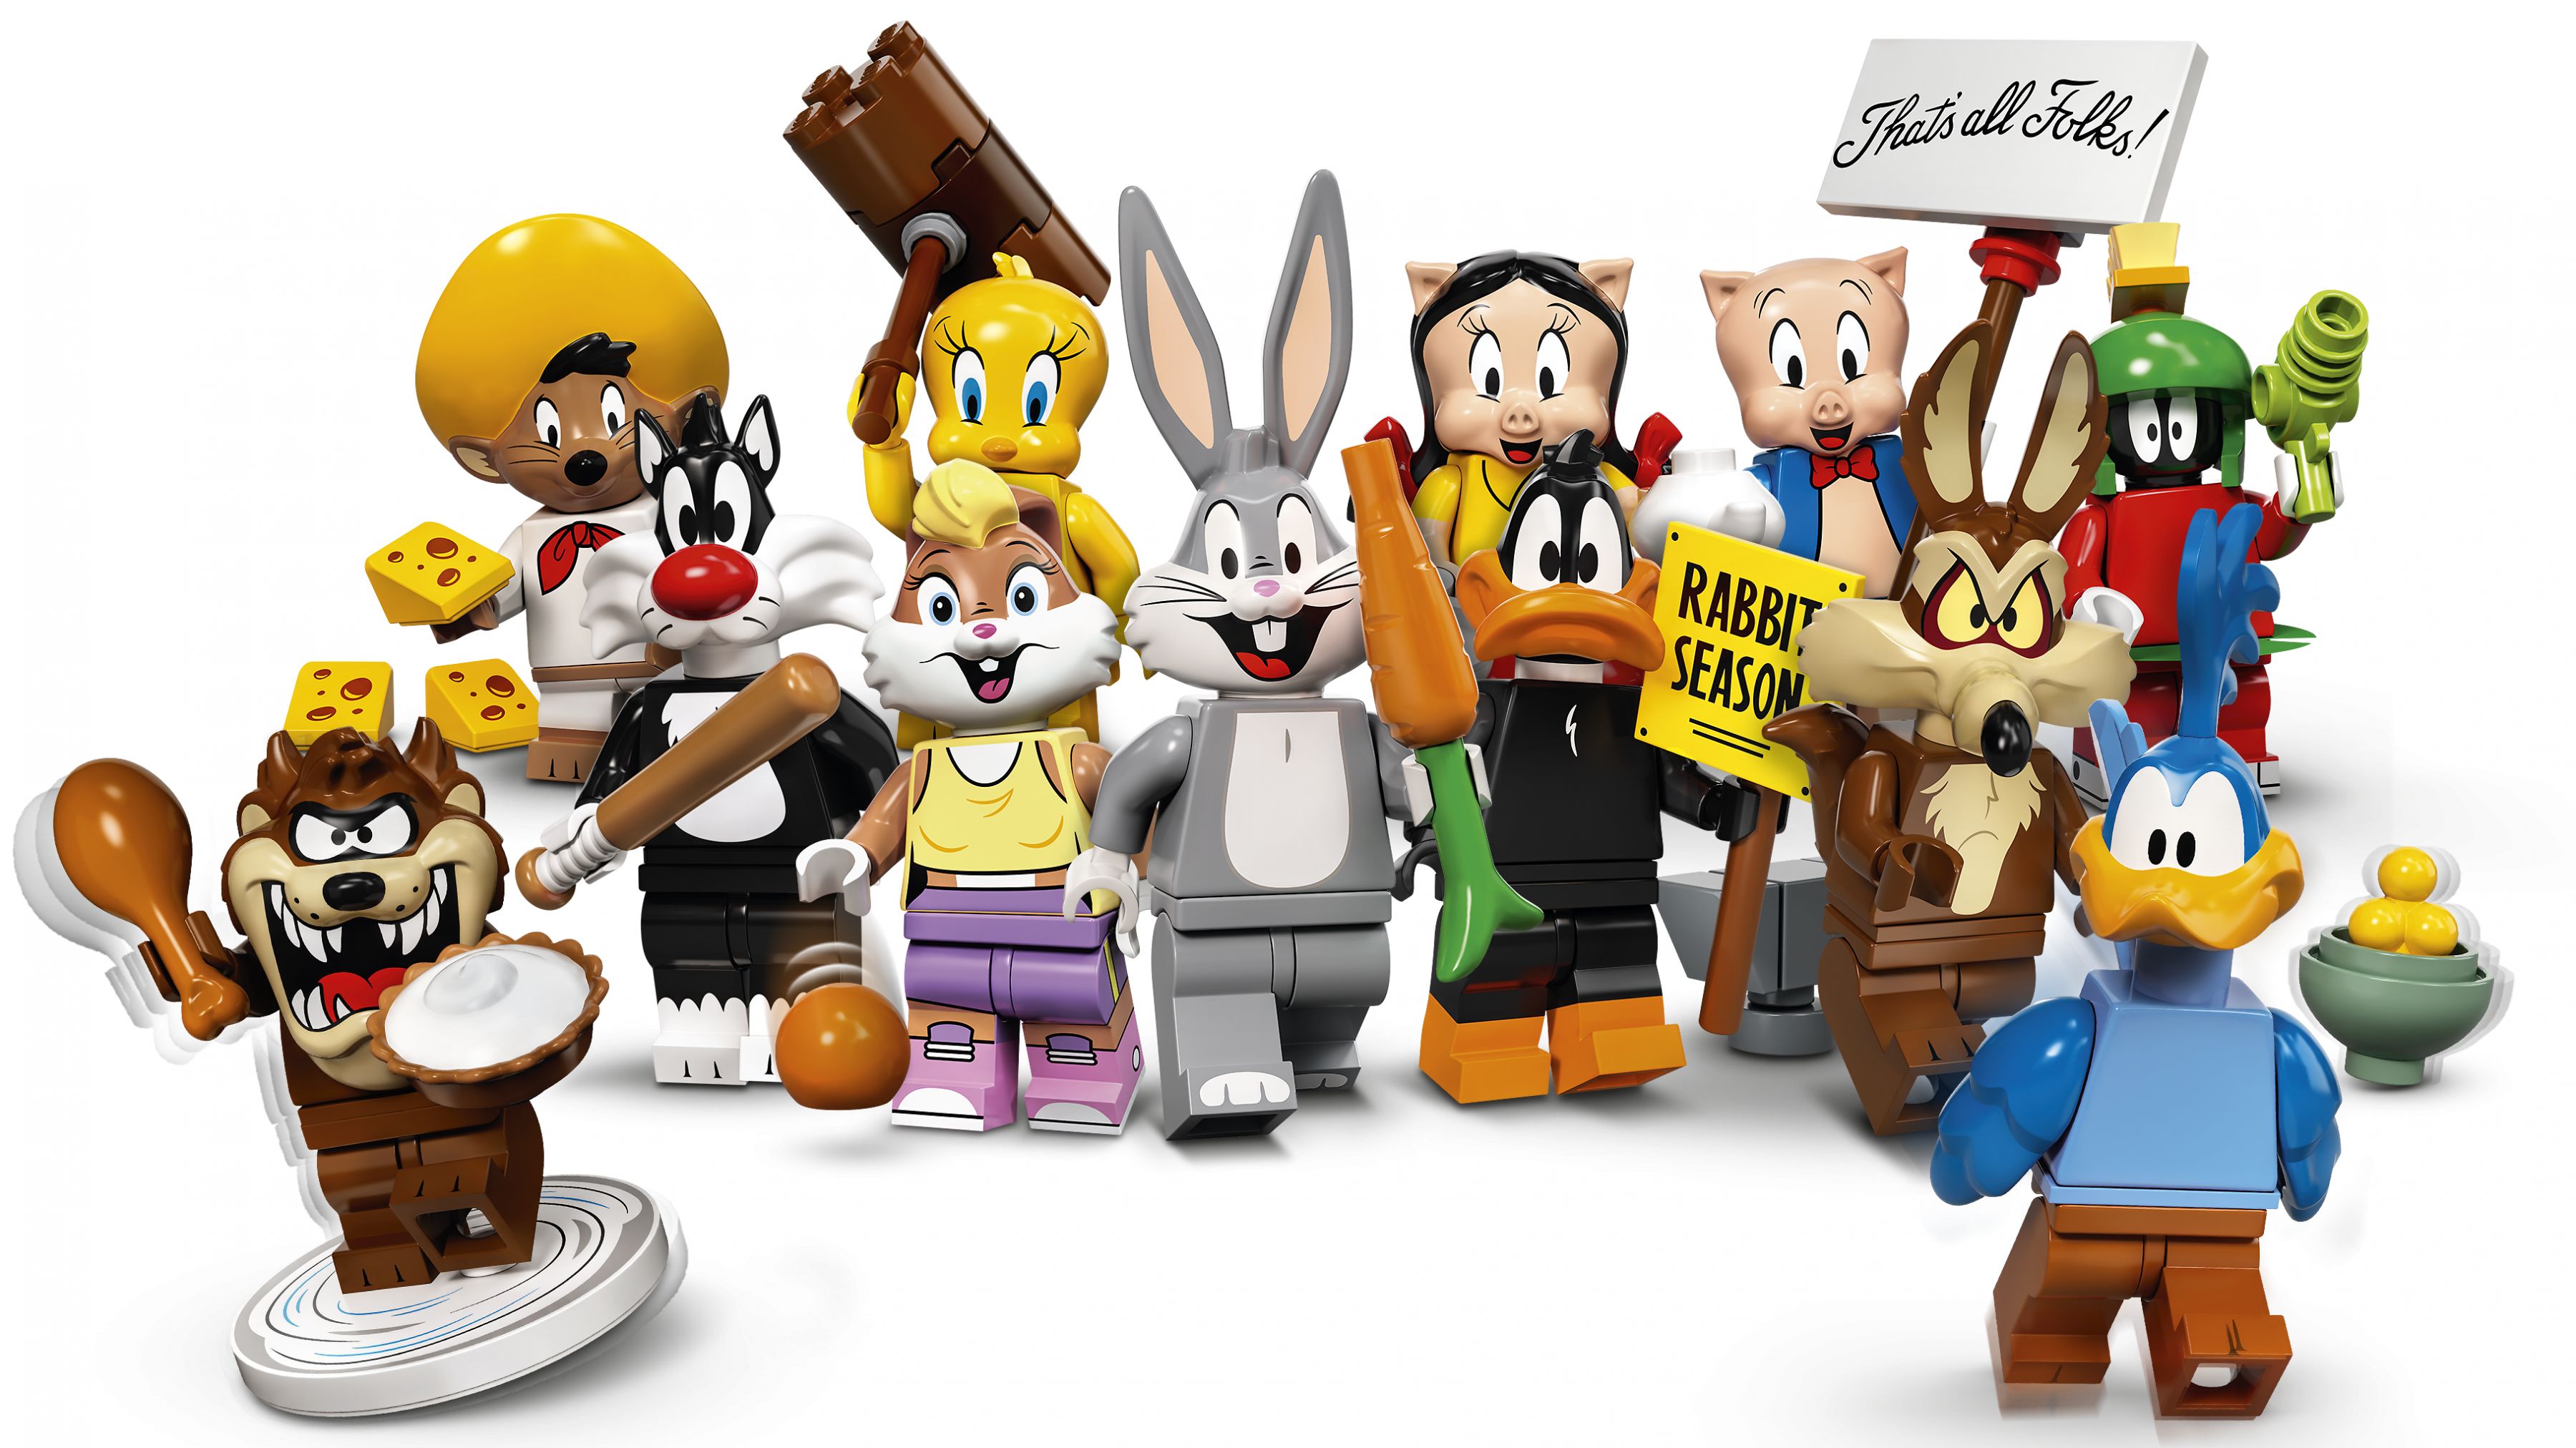 LEGO Collectable Minifigures 71030 Looney Tunes™ LEGO_71030_alt2.jpg